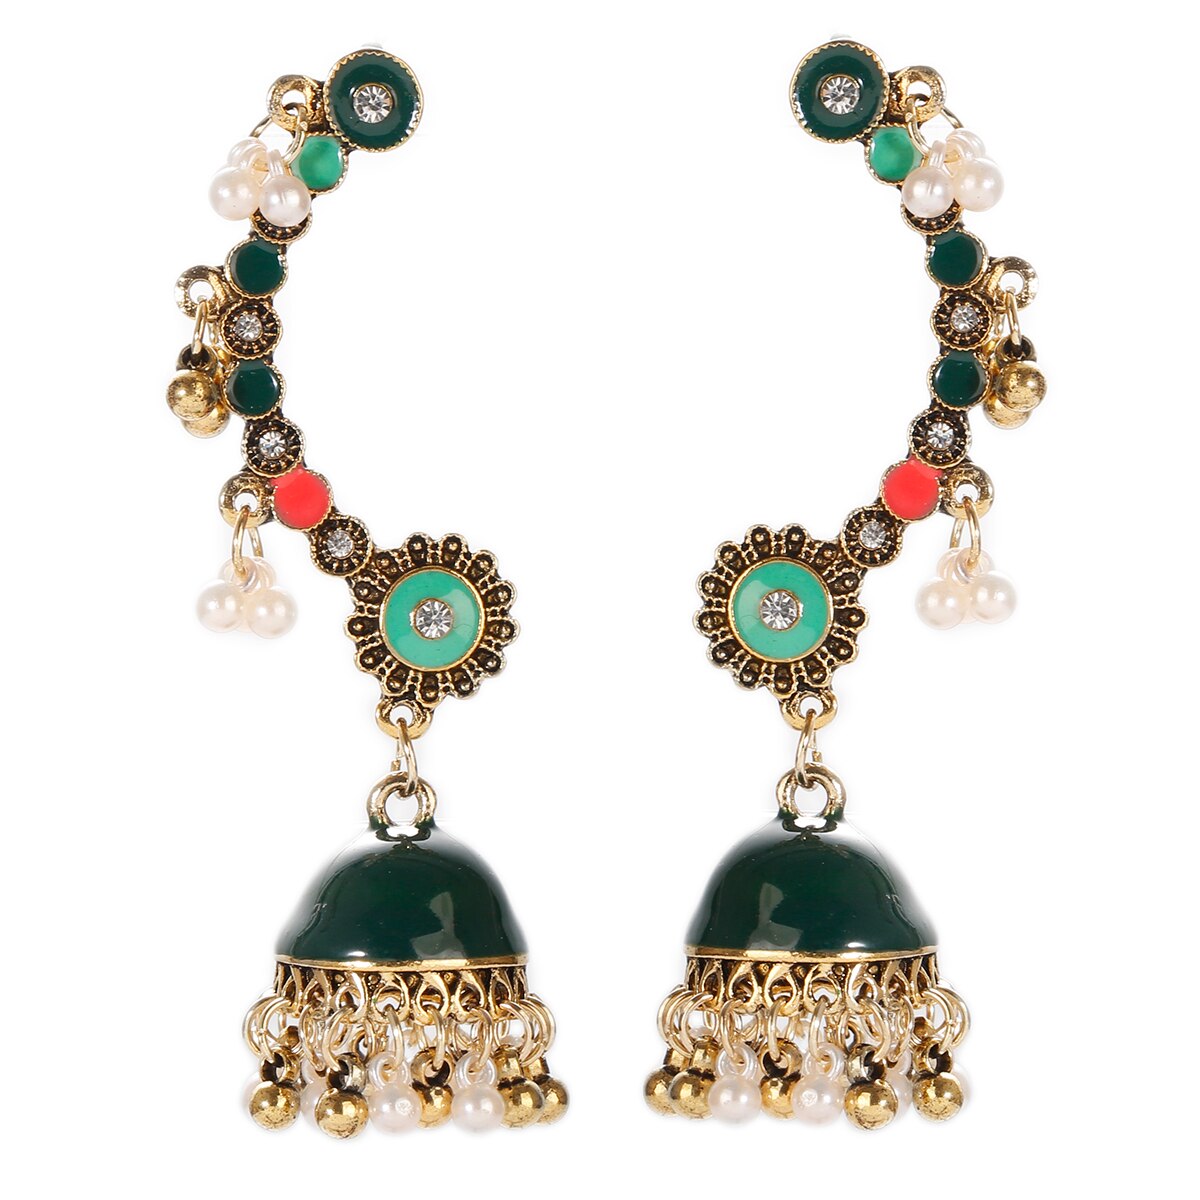 Vintage-Black-Dripping-Oil-Indian-Earring-For-Women-Pendient-Ethnic-Flower-Earring-Tibetan-Jewelry-B-1005004041465466-3